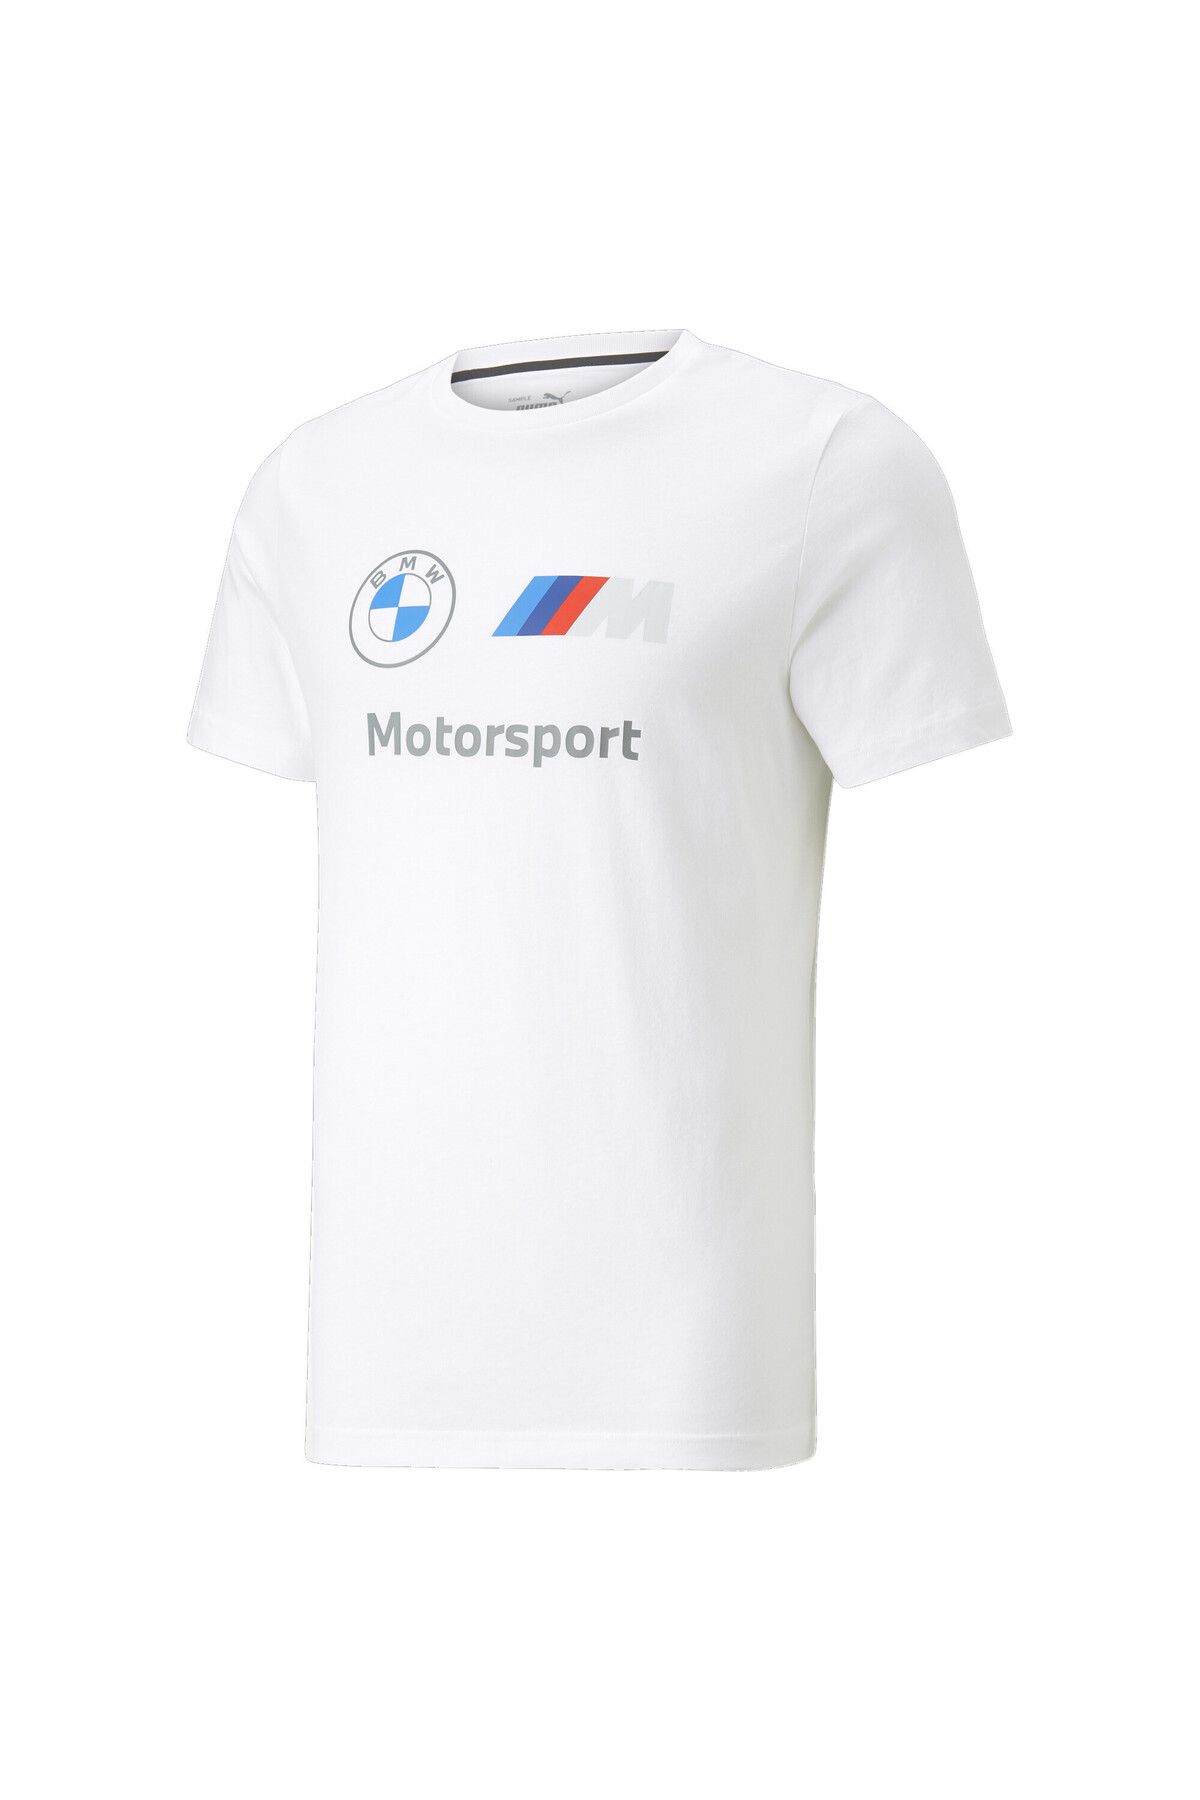 Ess Tee 538148-02 T-Shirt - White Motorsport Logo Puma Trendyol M Men\'s Bmw